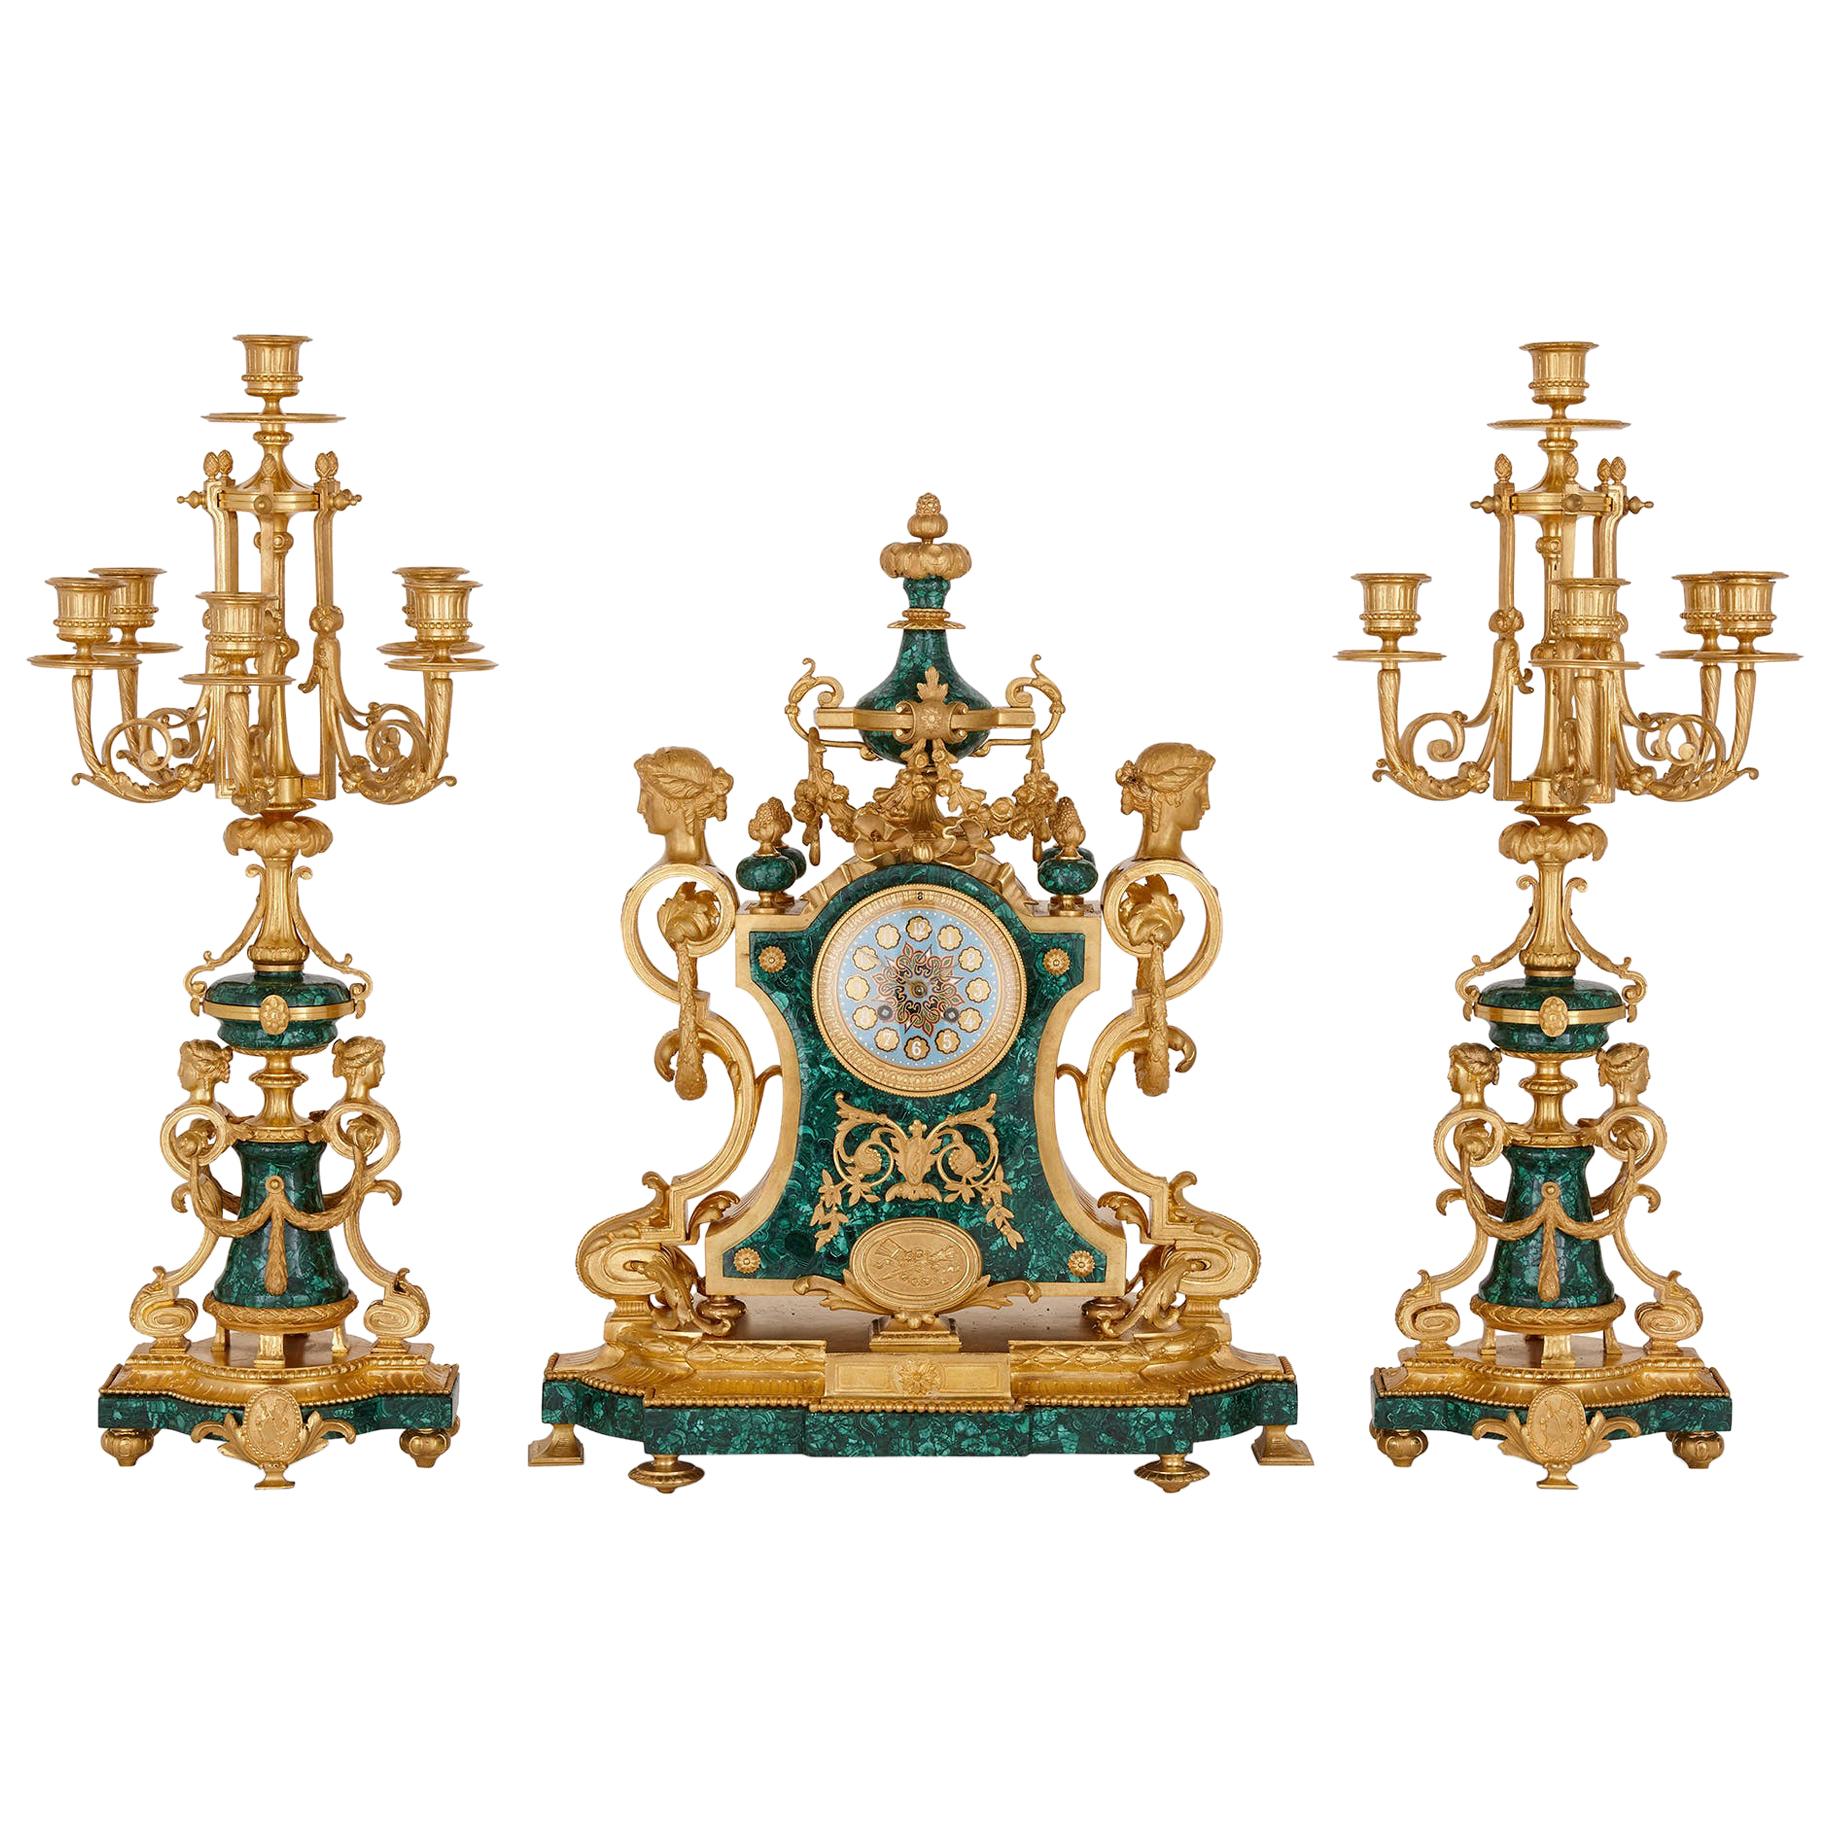 Napoleon III Period Neoclassical Style Three-Piece Clock Set